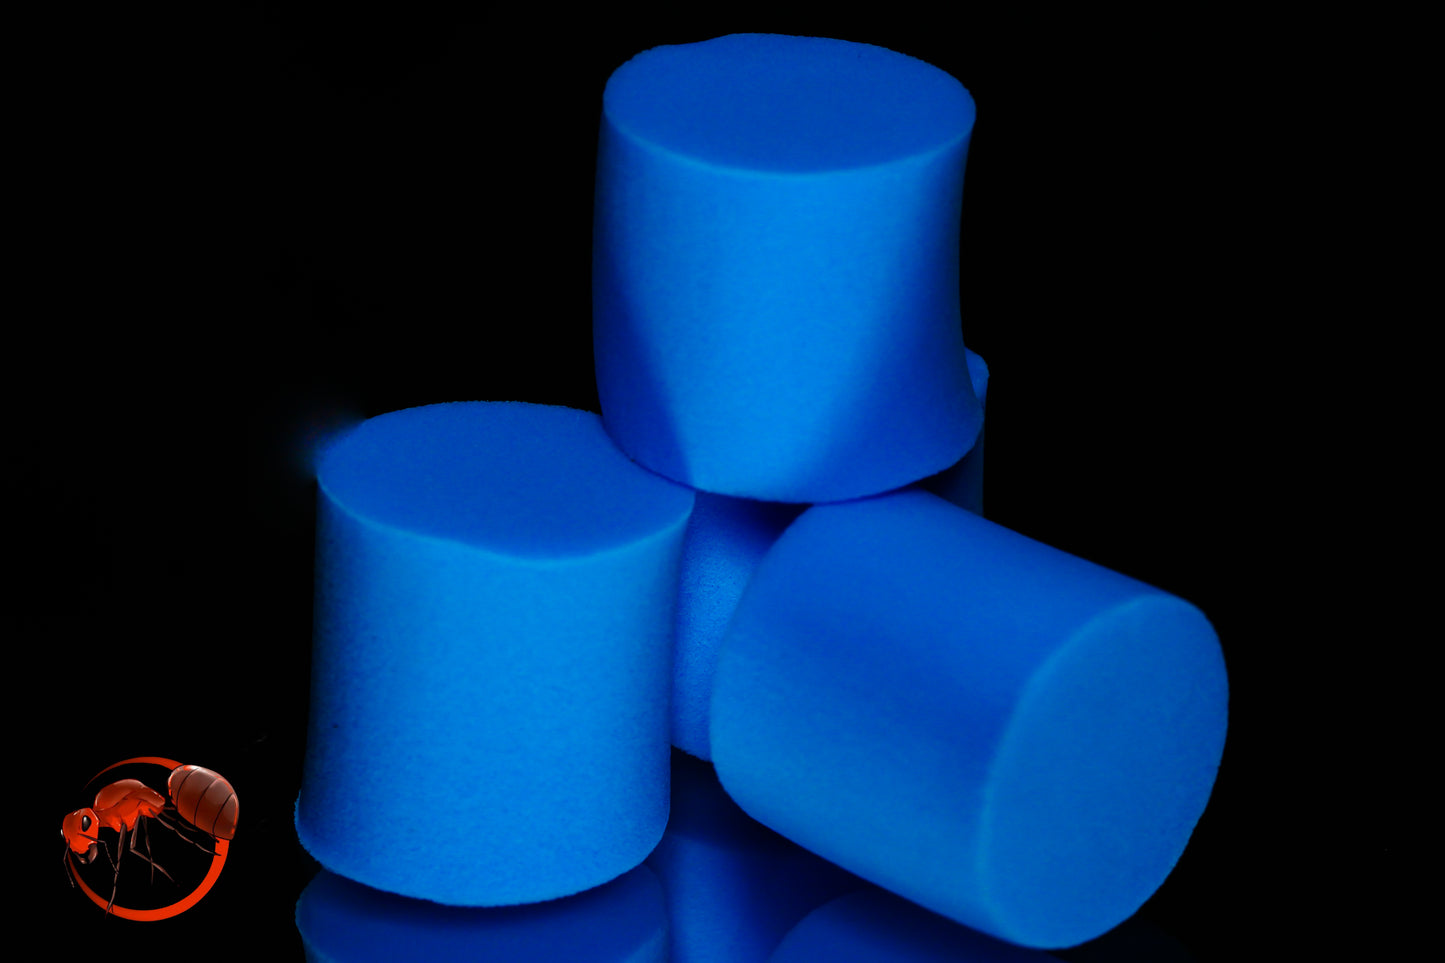 Blue PVA Test Tube Sponges (16mm tubes)